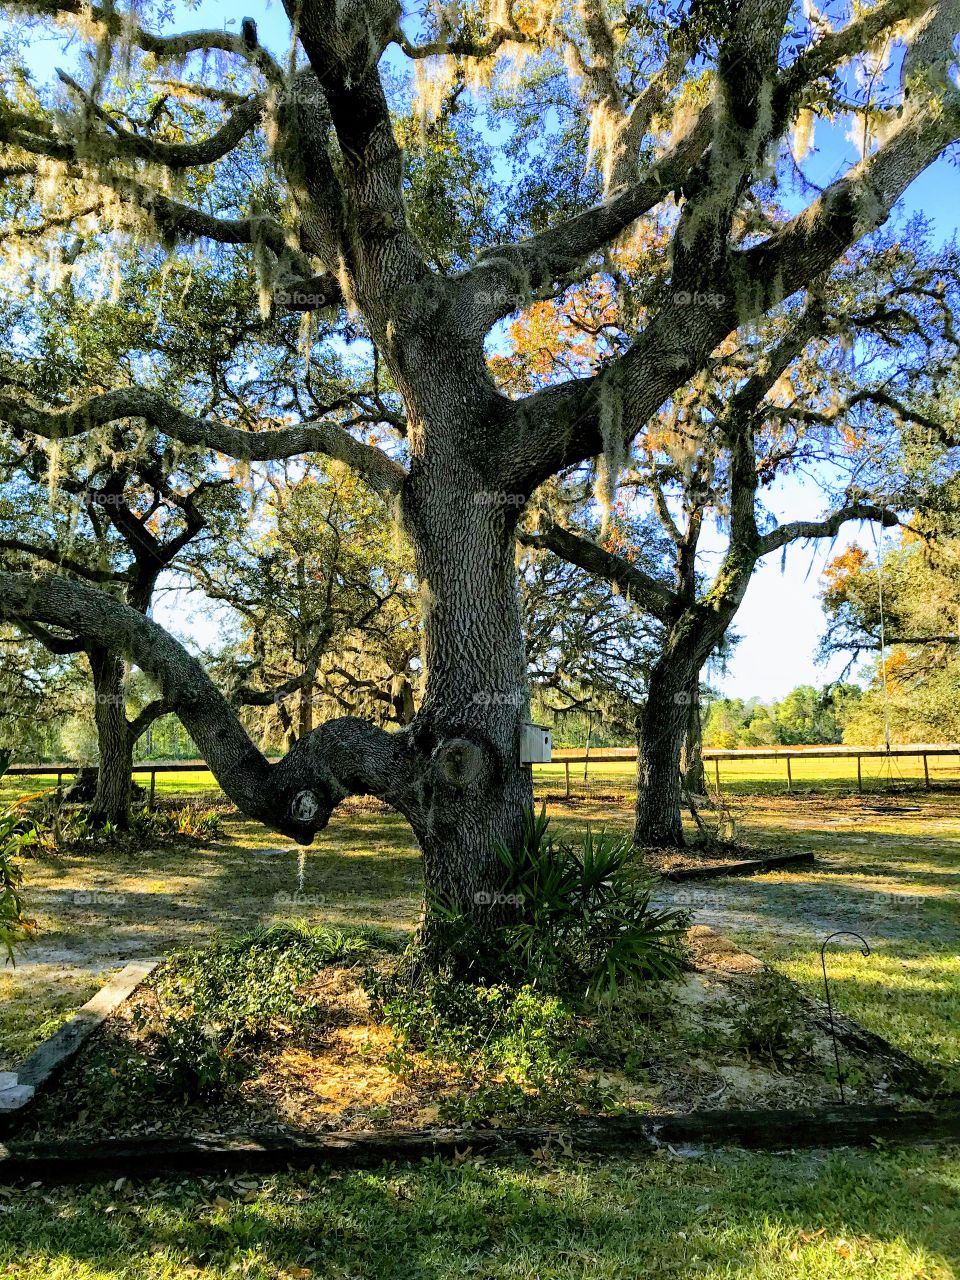 Beautiful Florida scenery ... live oaks draped in Spanish moss